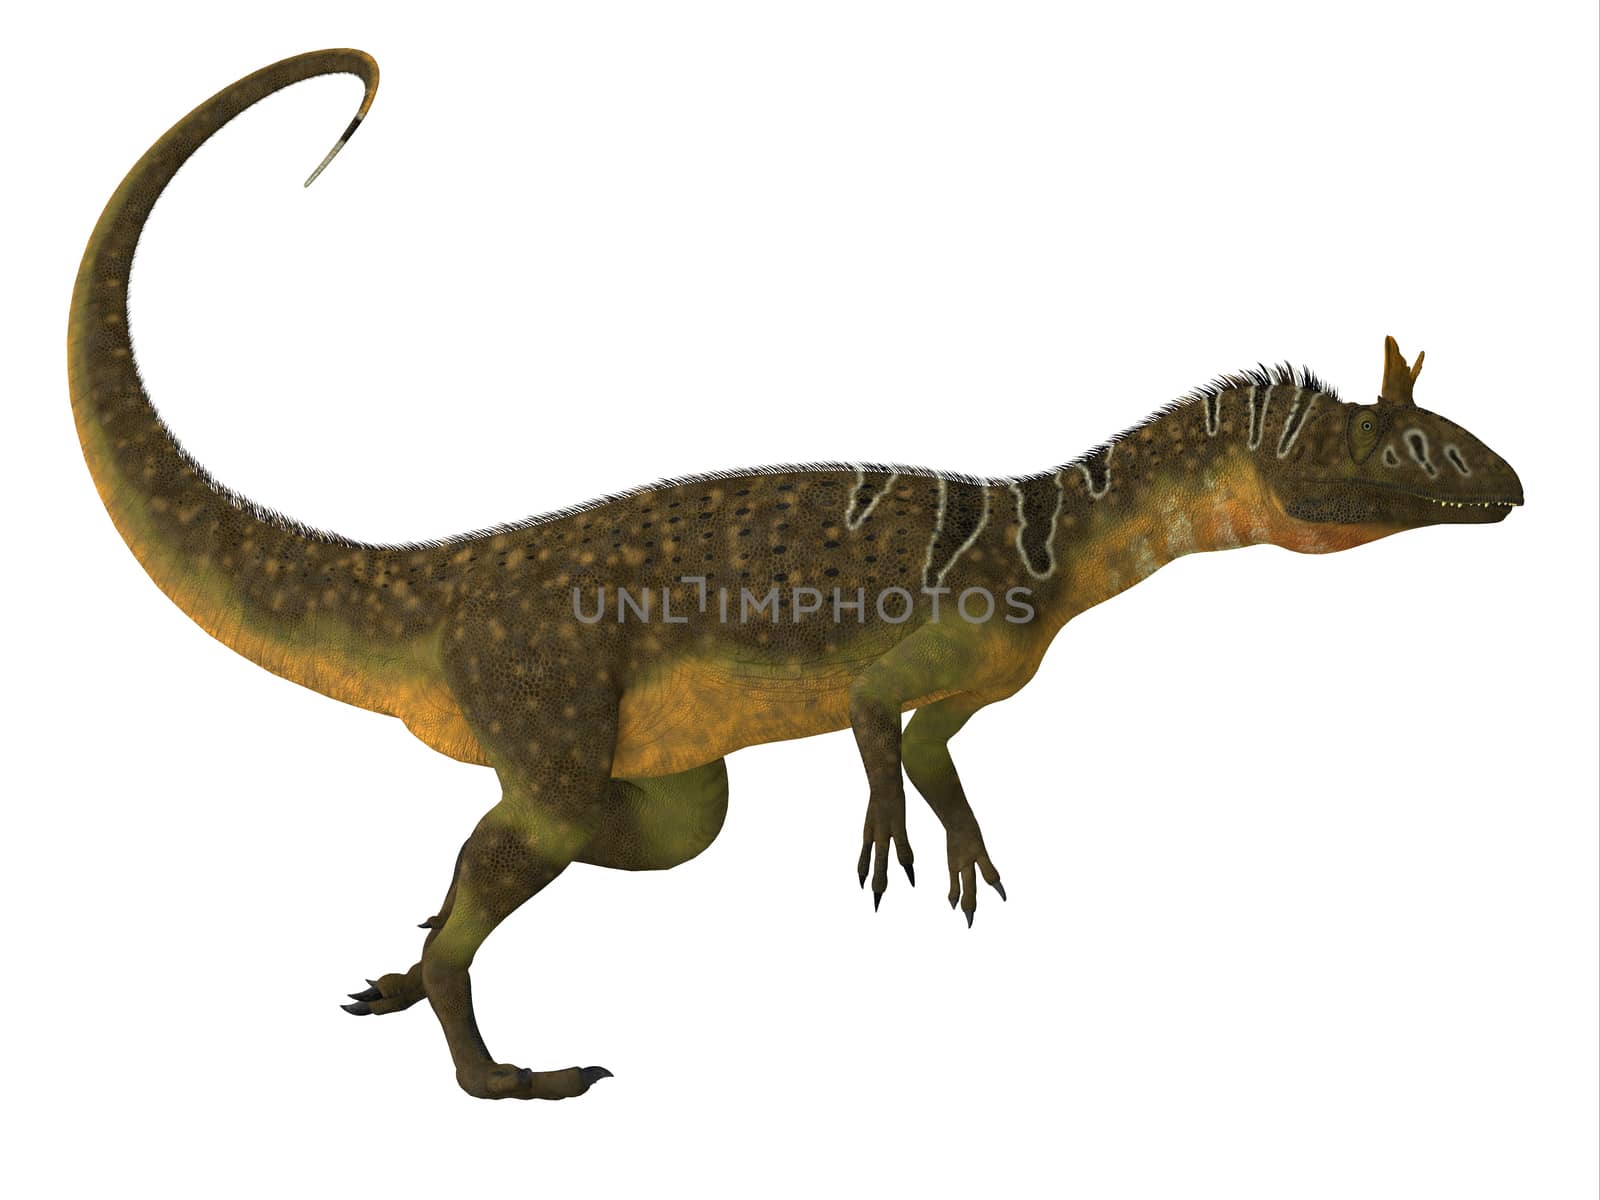 Cryolophosaurus Dinosaur Side View by Catmando